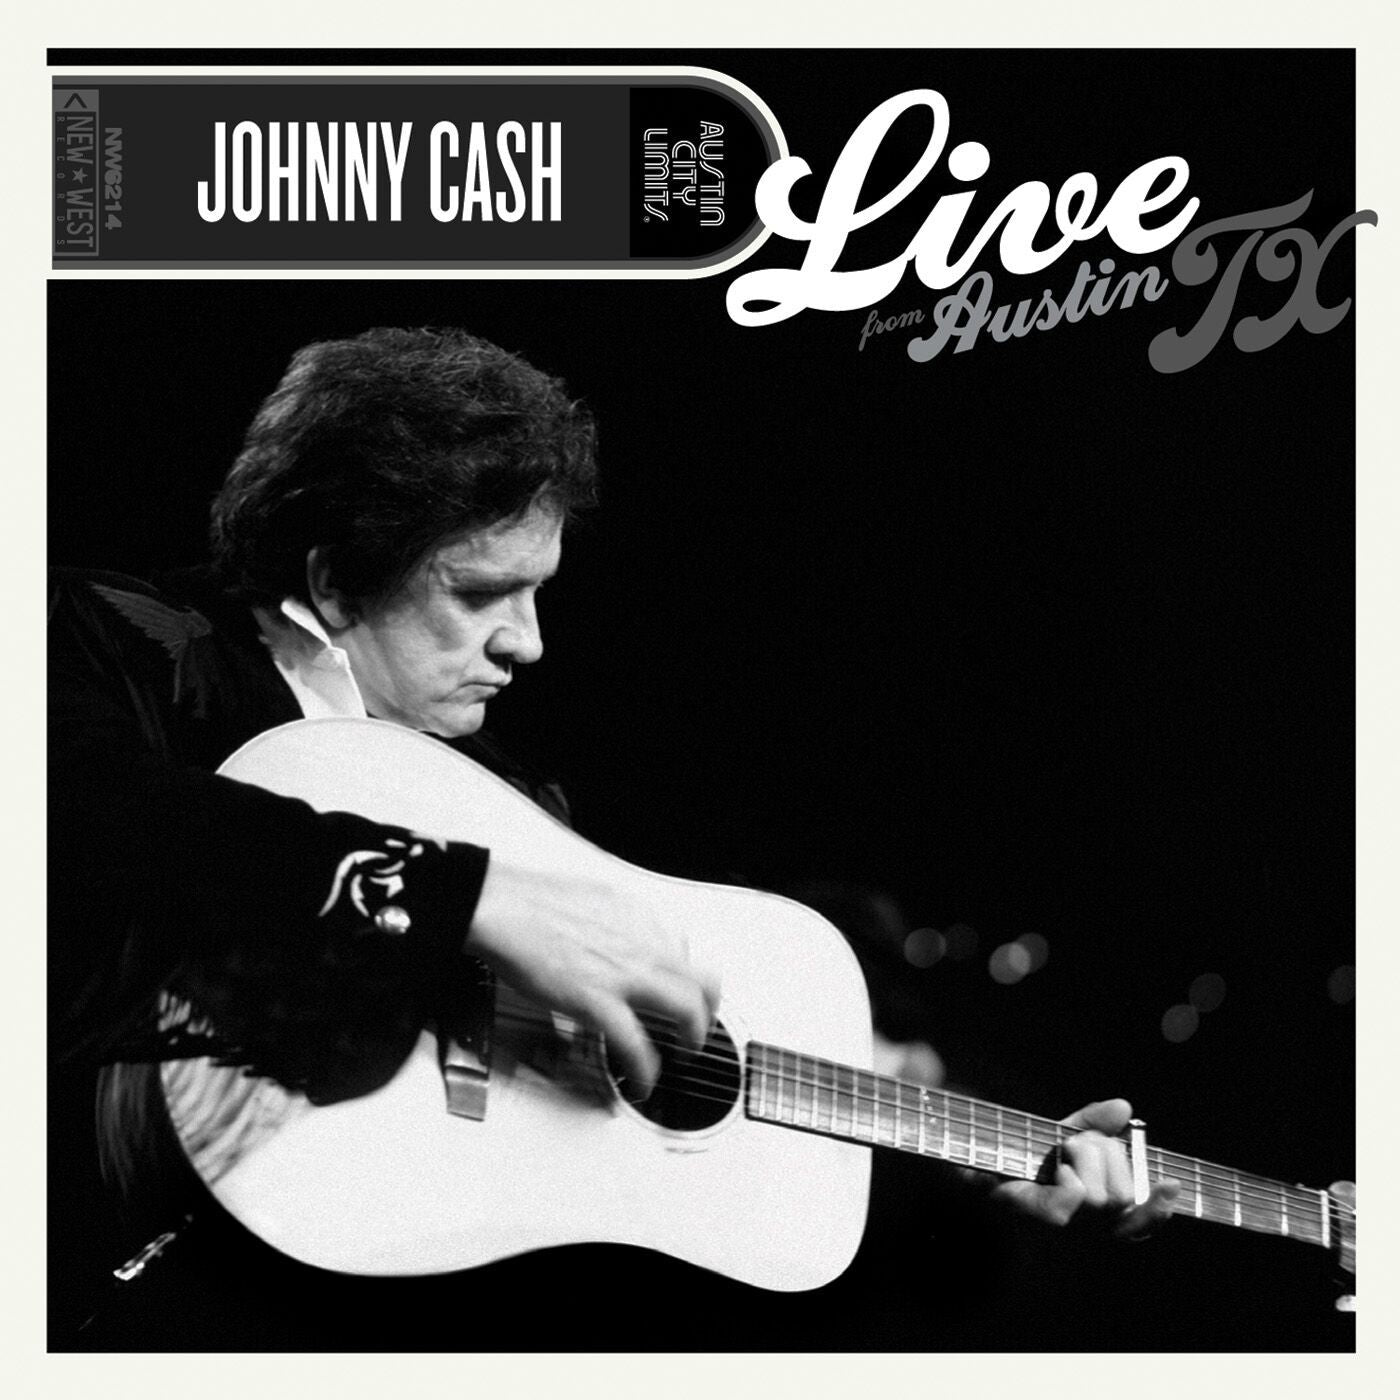 Johnny Cash - Live From Austin, TX [CD/DVD]